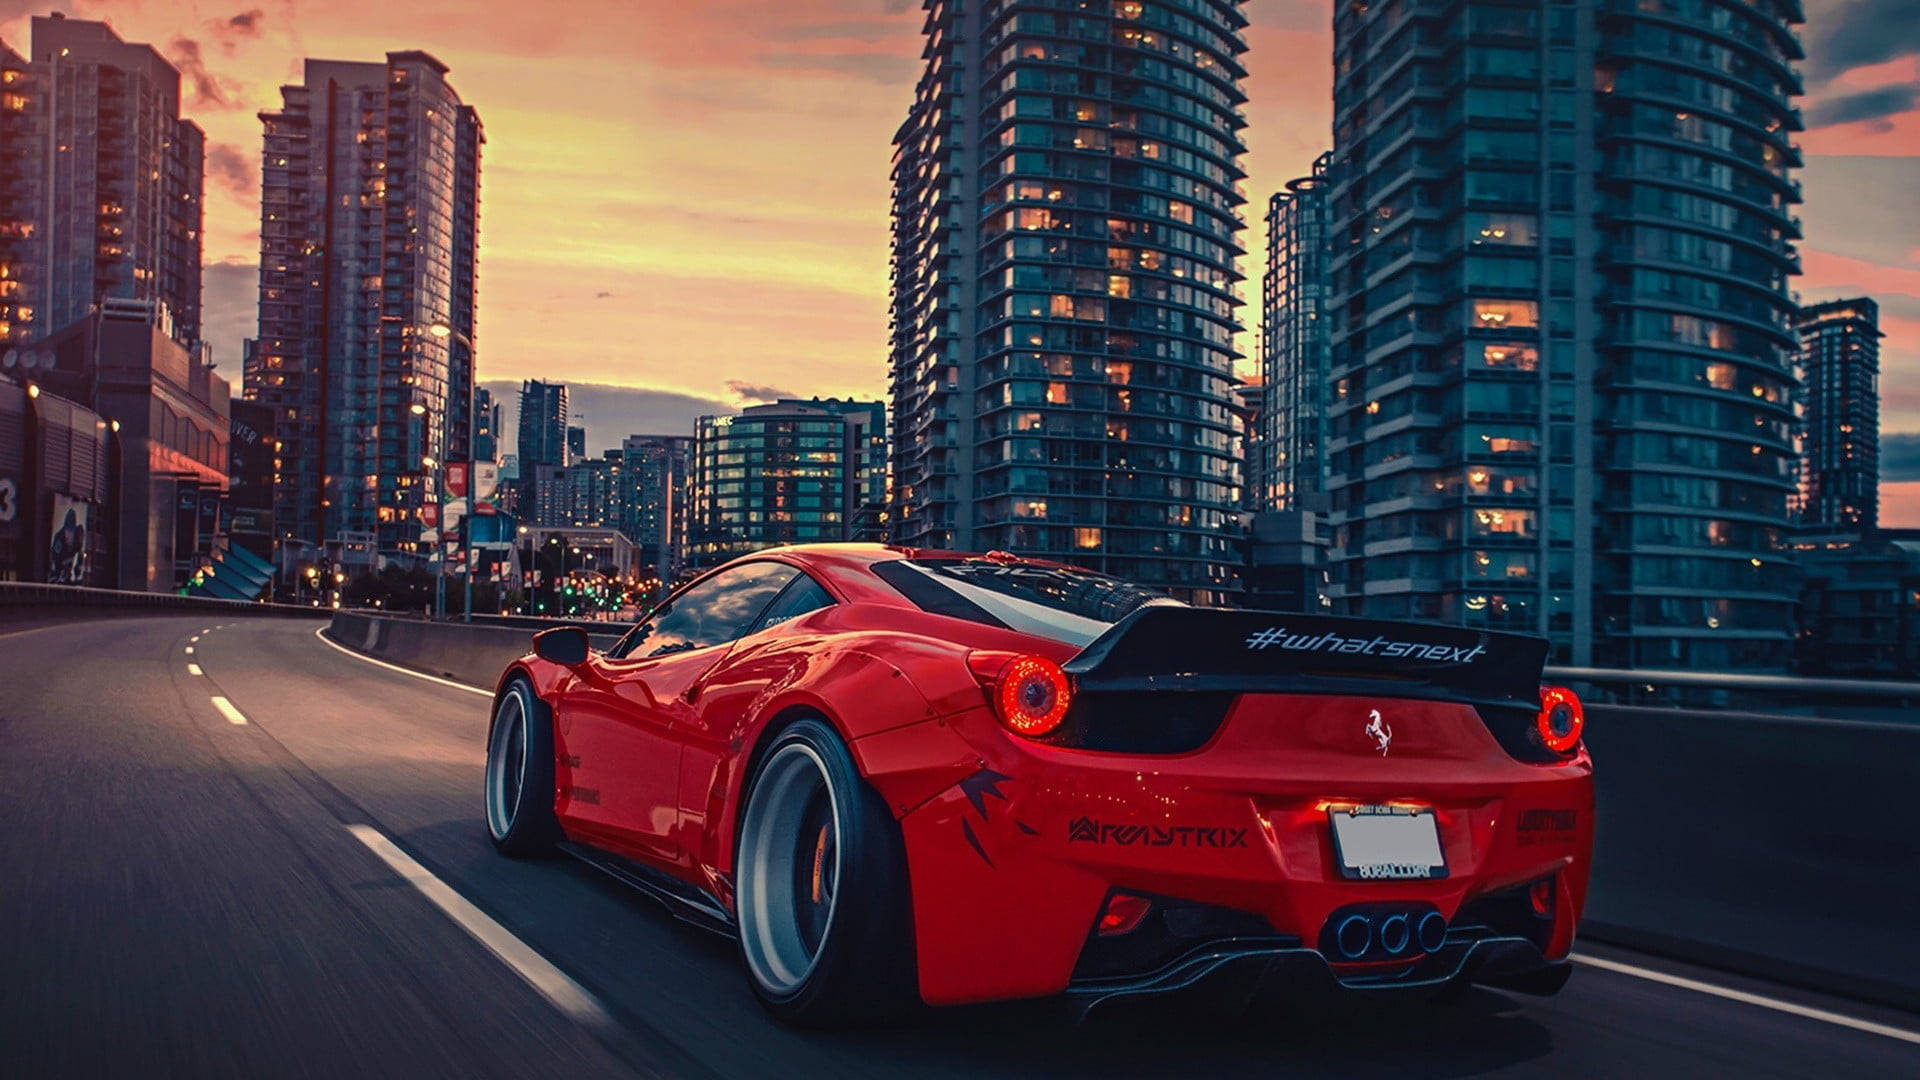 Driving Through The City, Ferrari Ipad Wallpaper